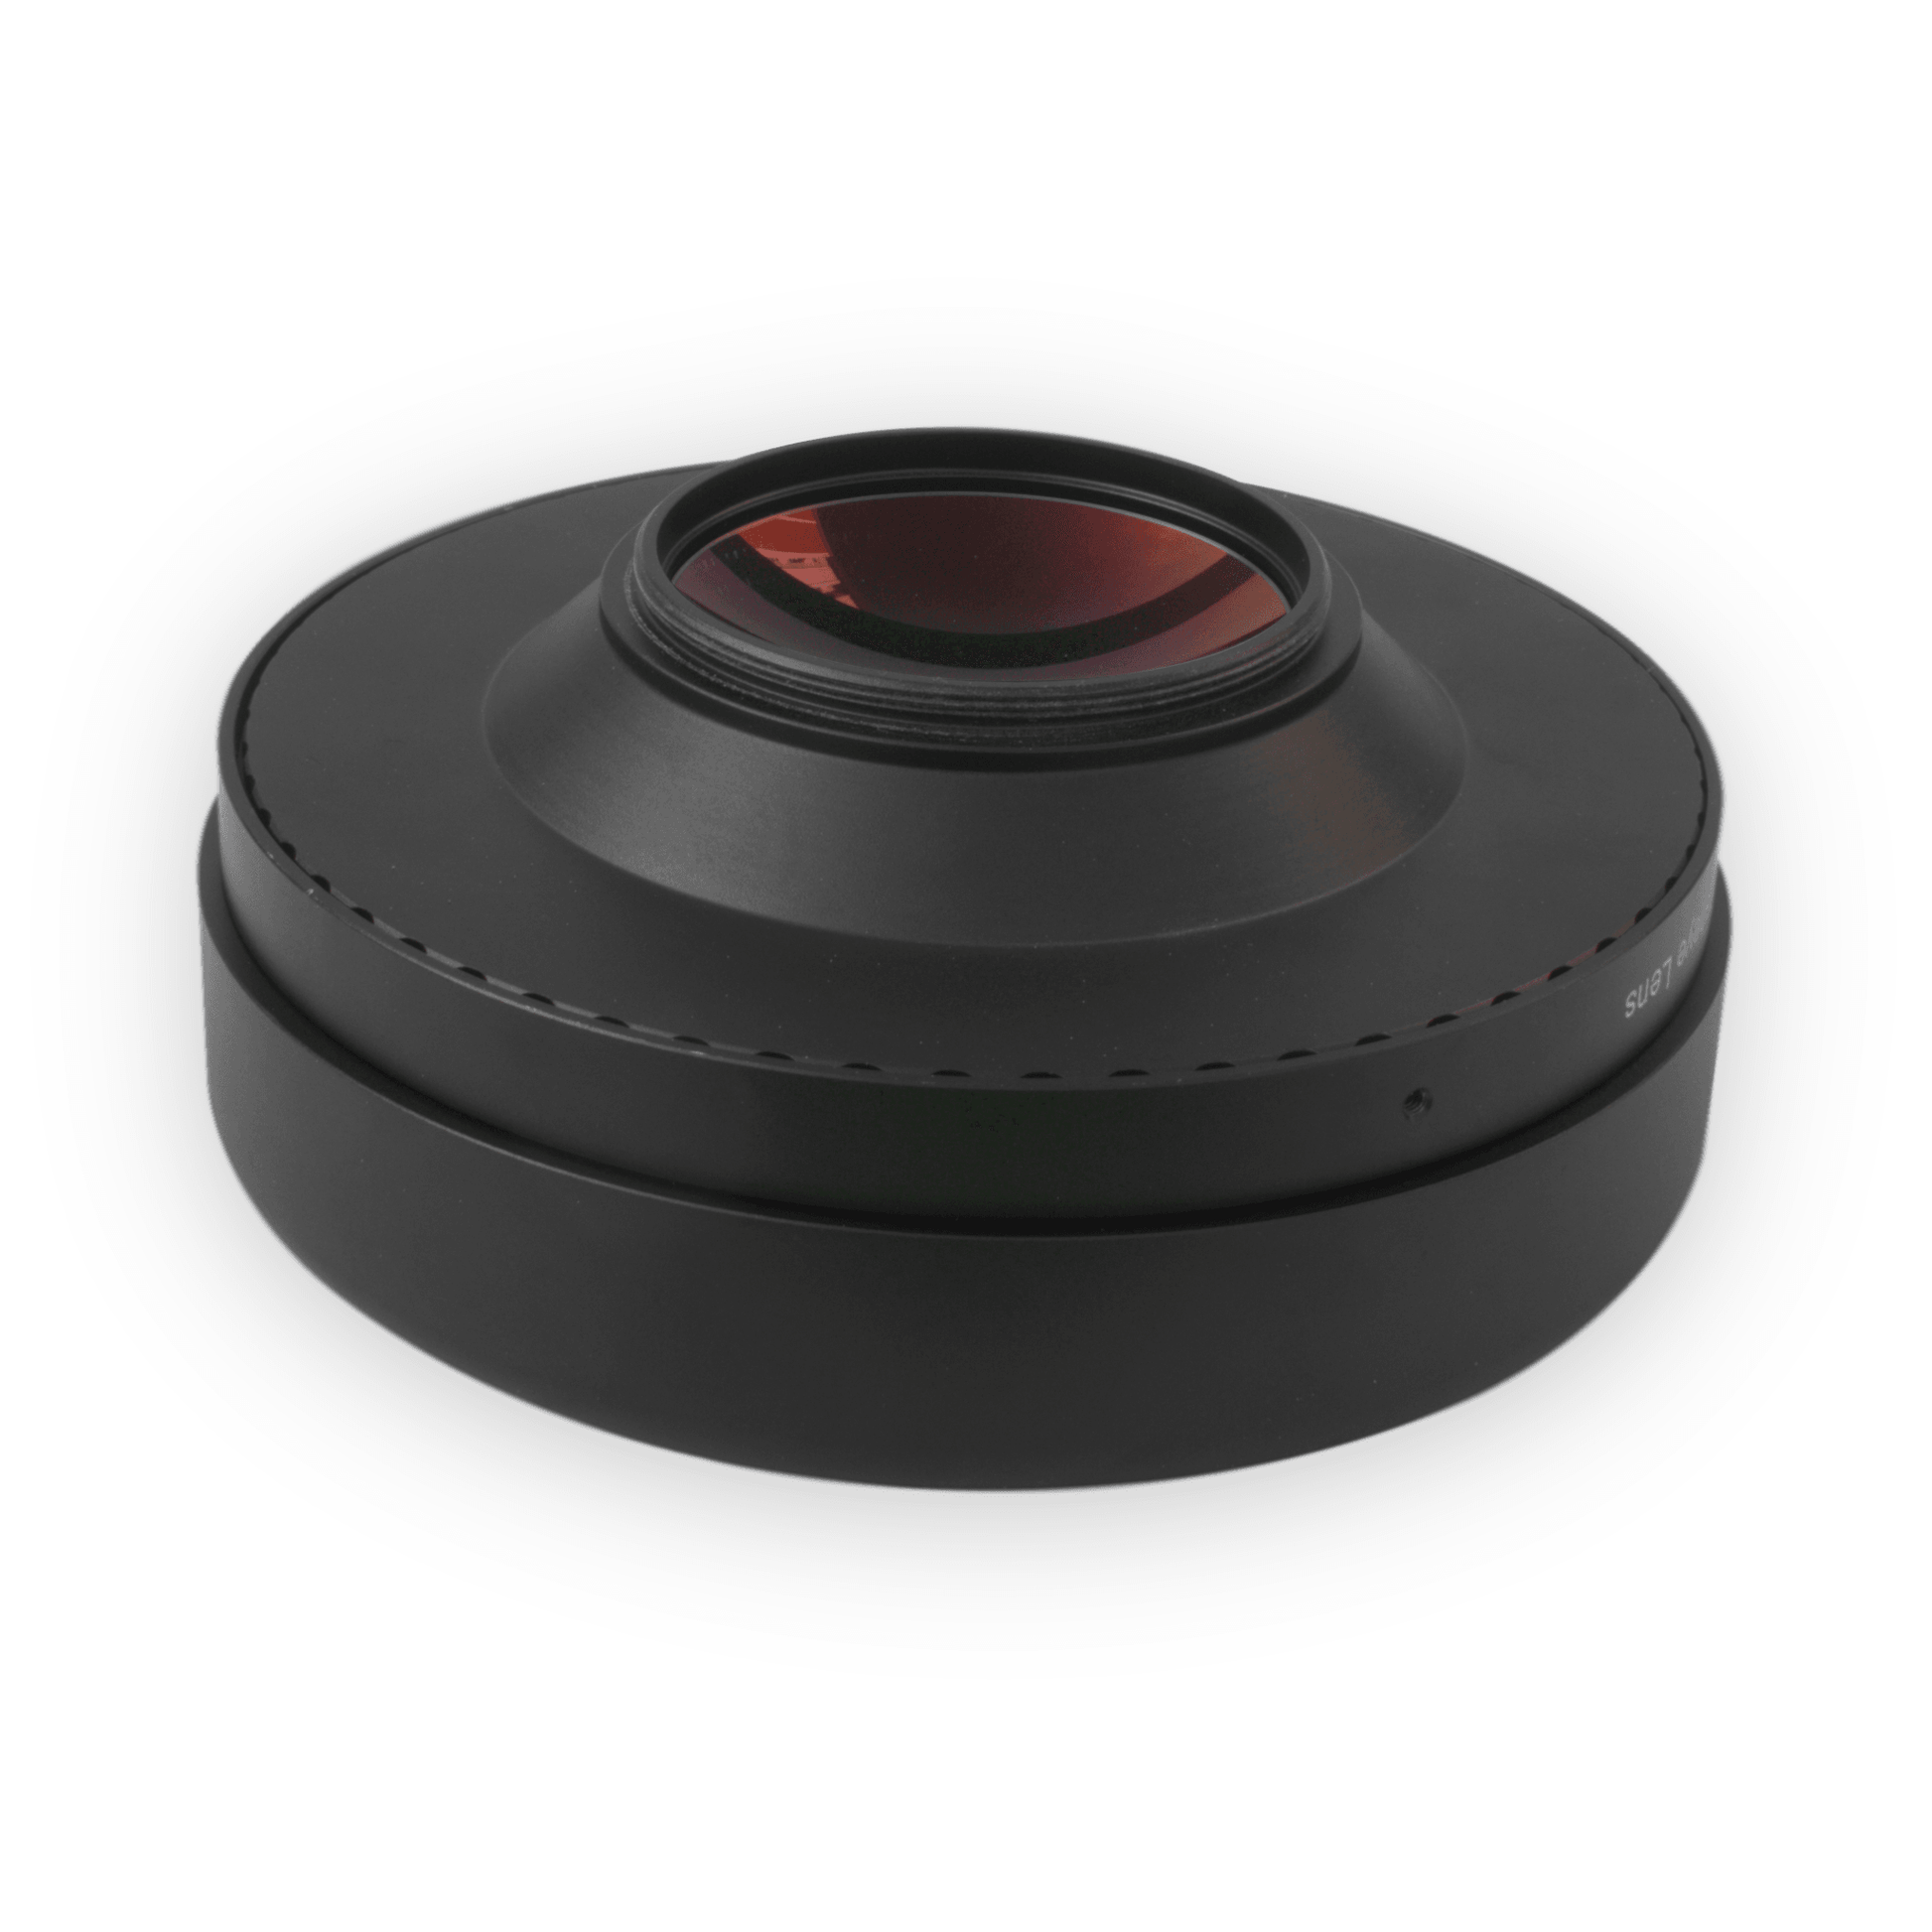 52mm 0.3x Fisheye Lens - REALM DISTRIBUTION